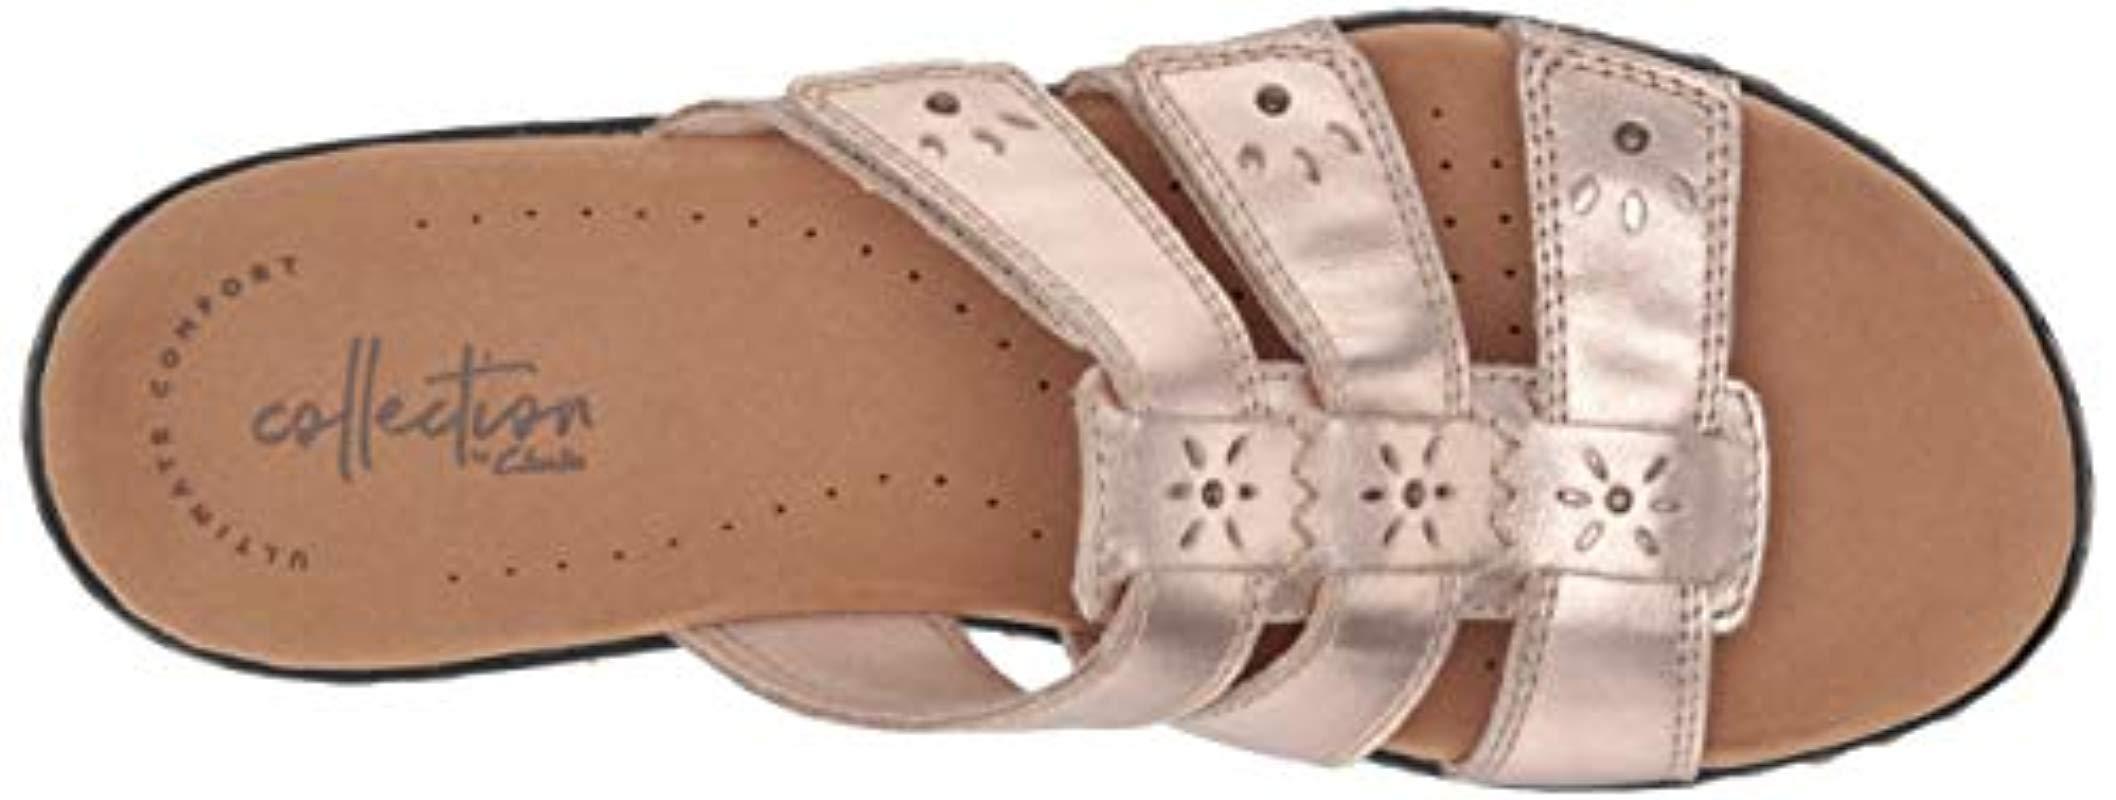 Clarks Rose Gold Leather Leisa Spring Triple Strap Slide Sandal New